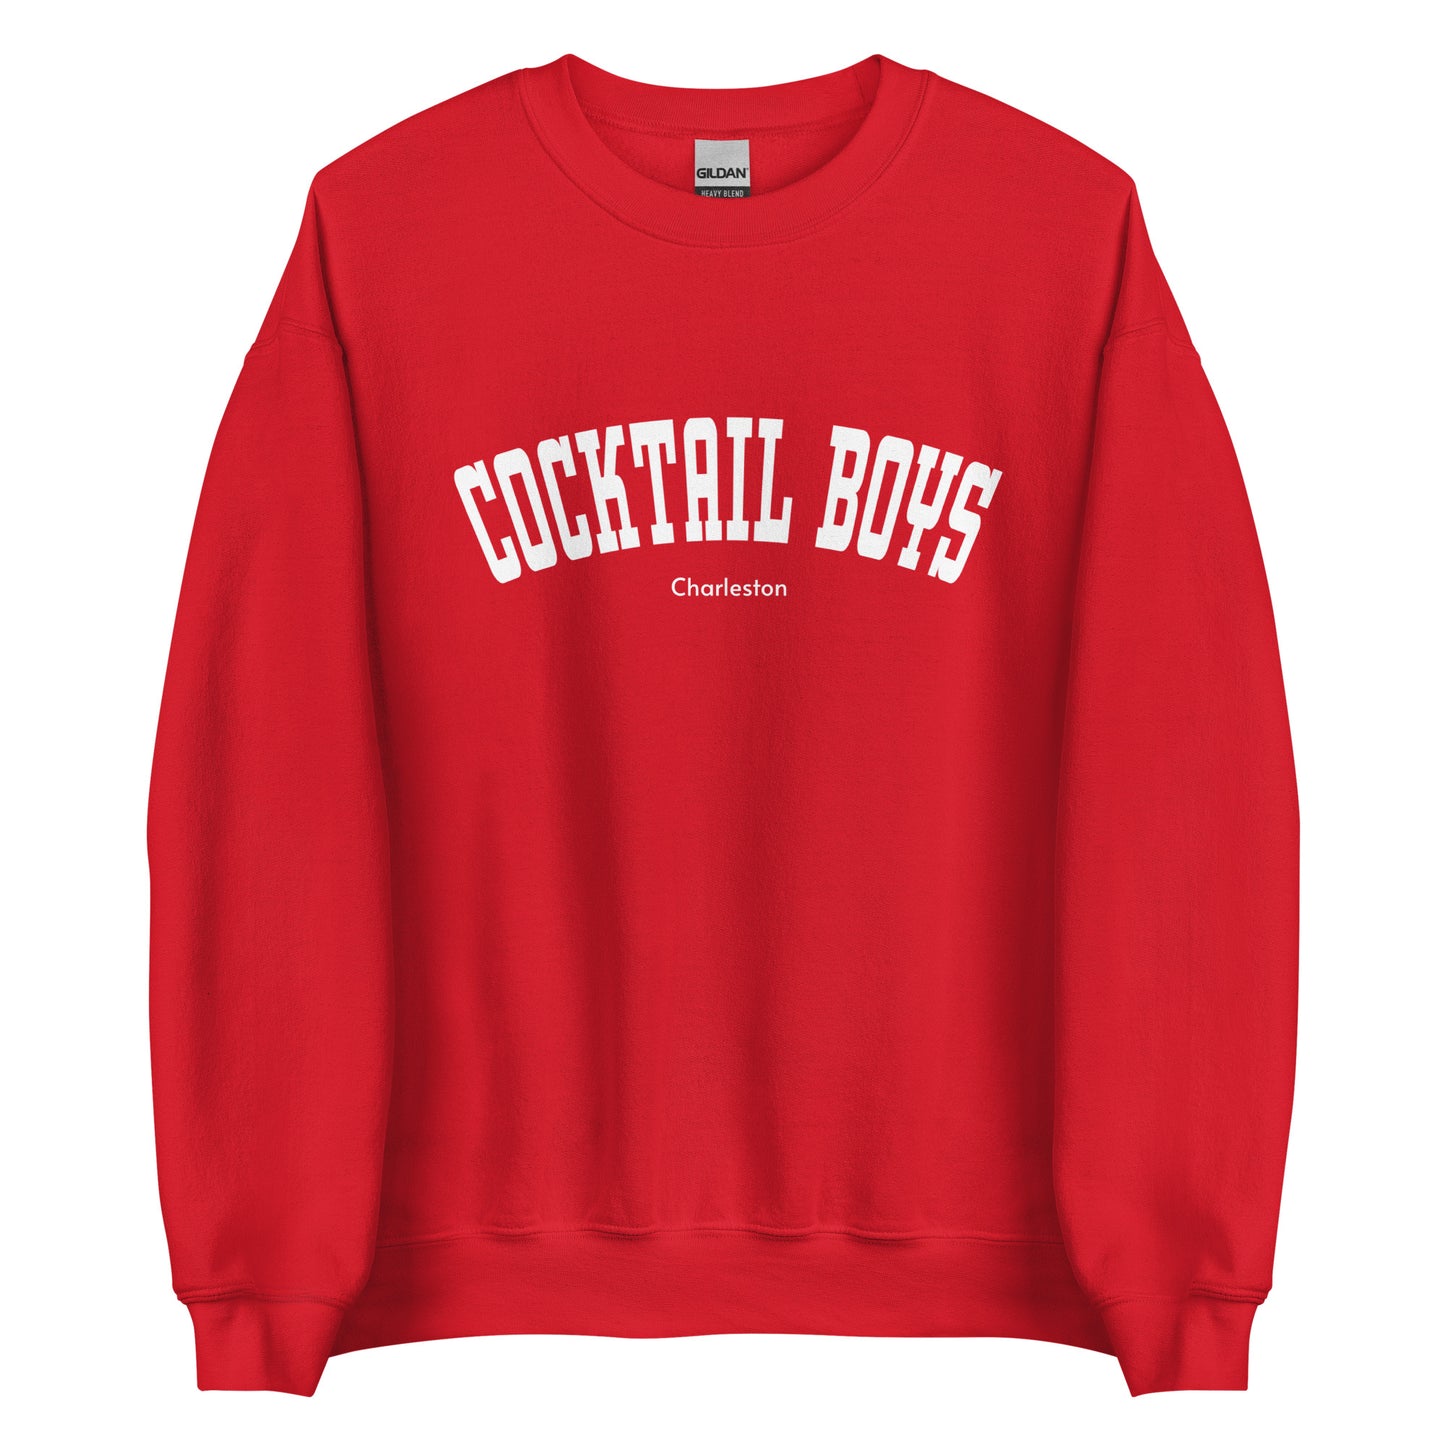 Cocktail Boys Charleston Unisex Sweatshirt